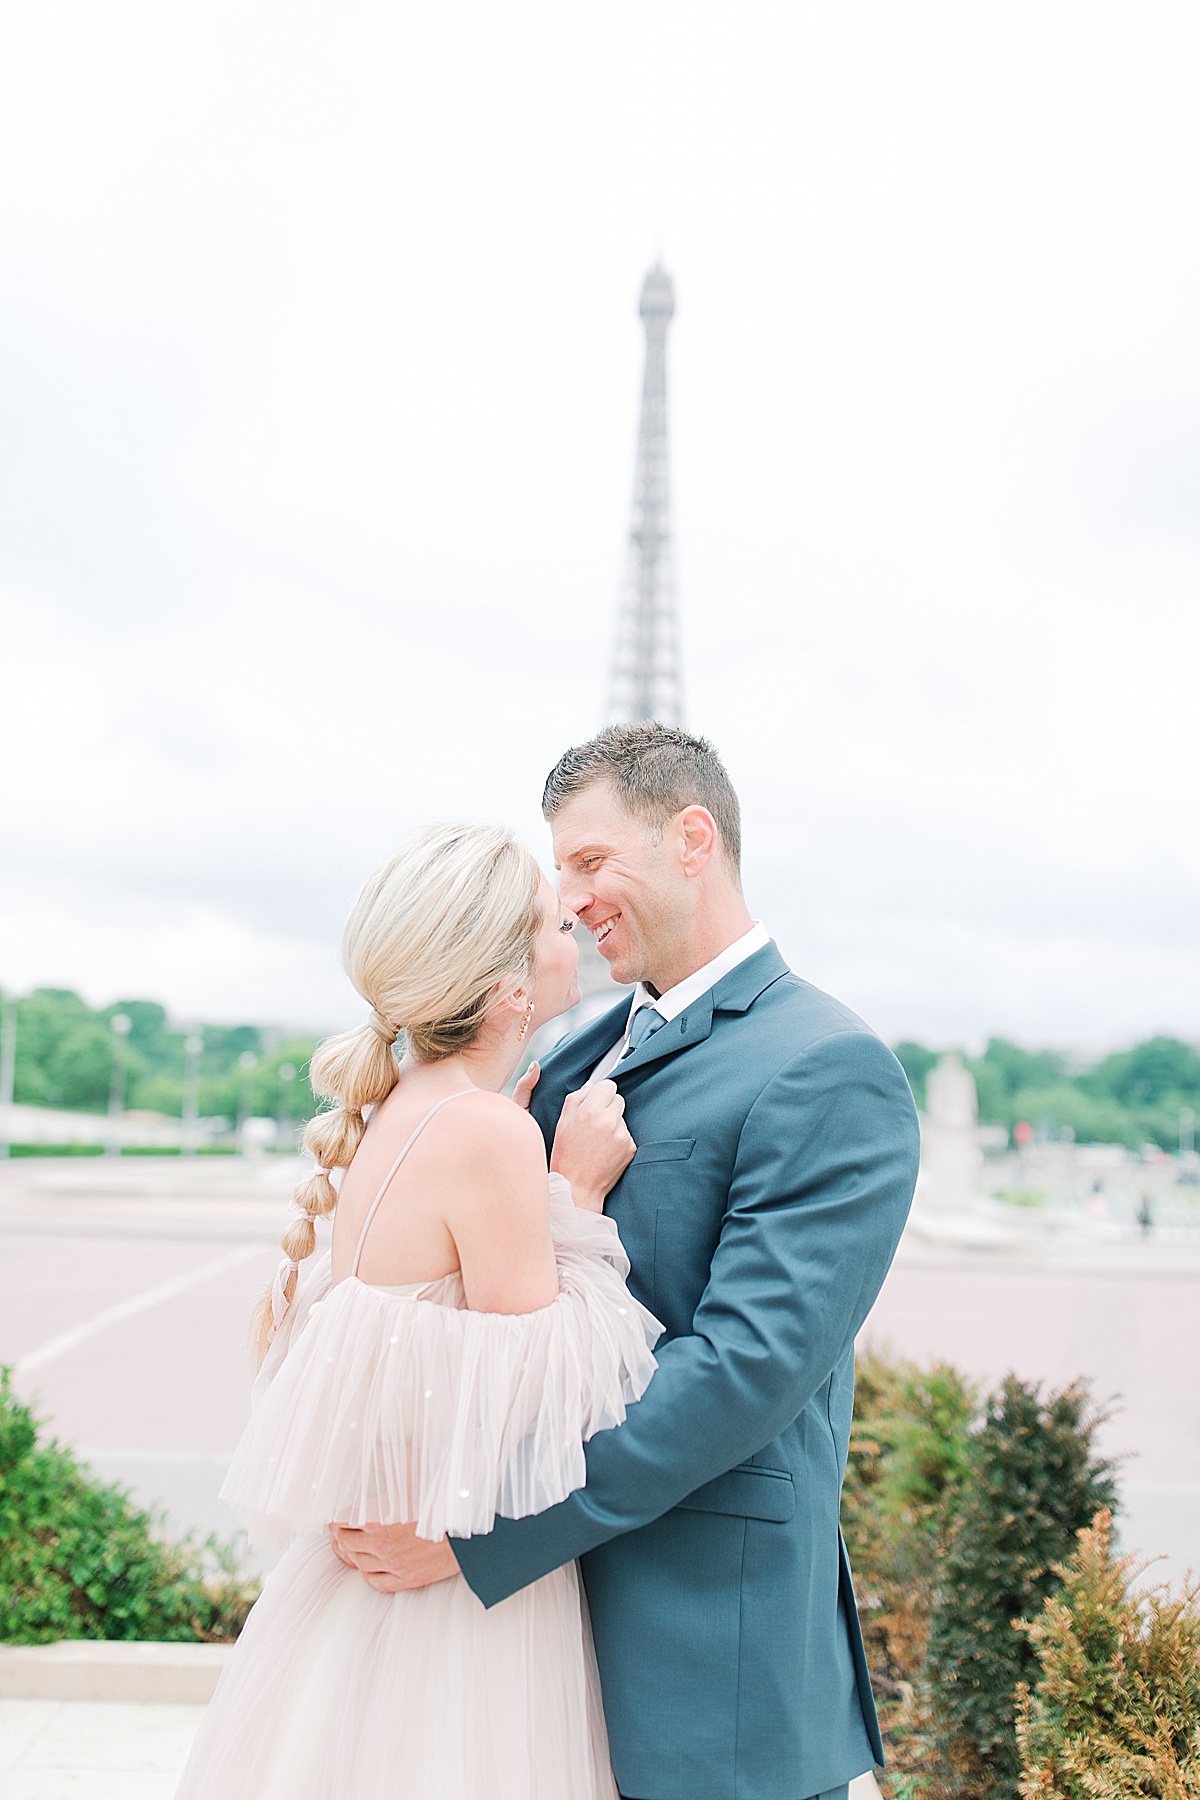 Eiffel Tower Wedding Bride and Groom Snuggling Photo